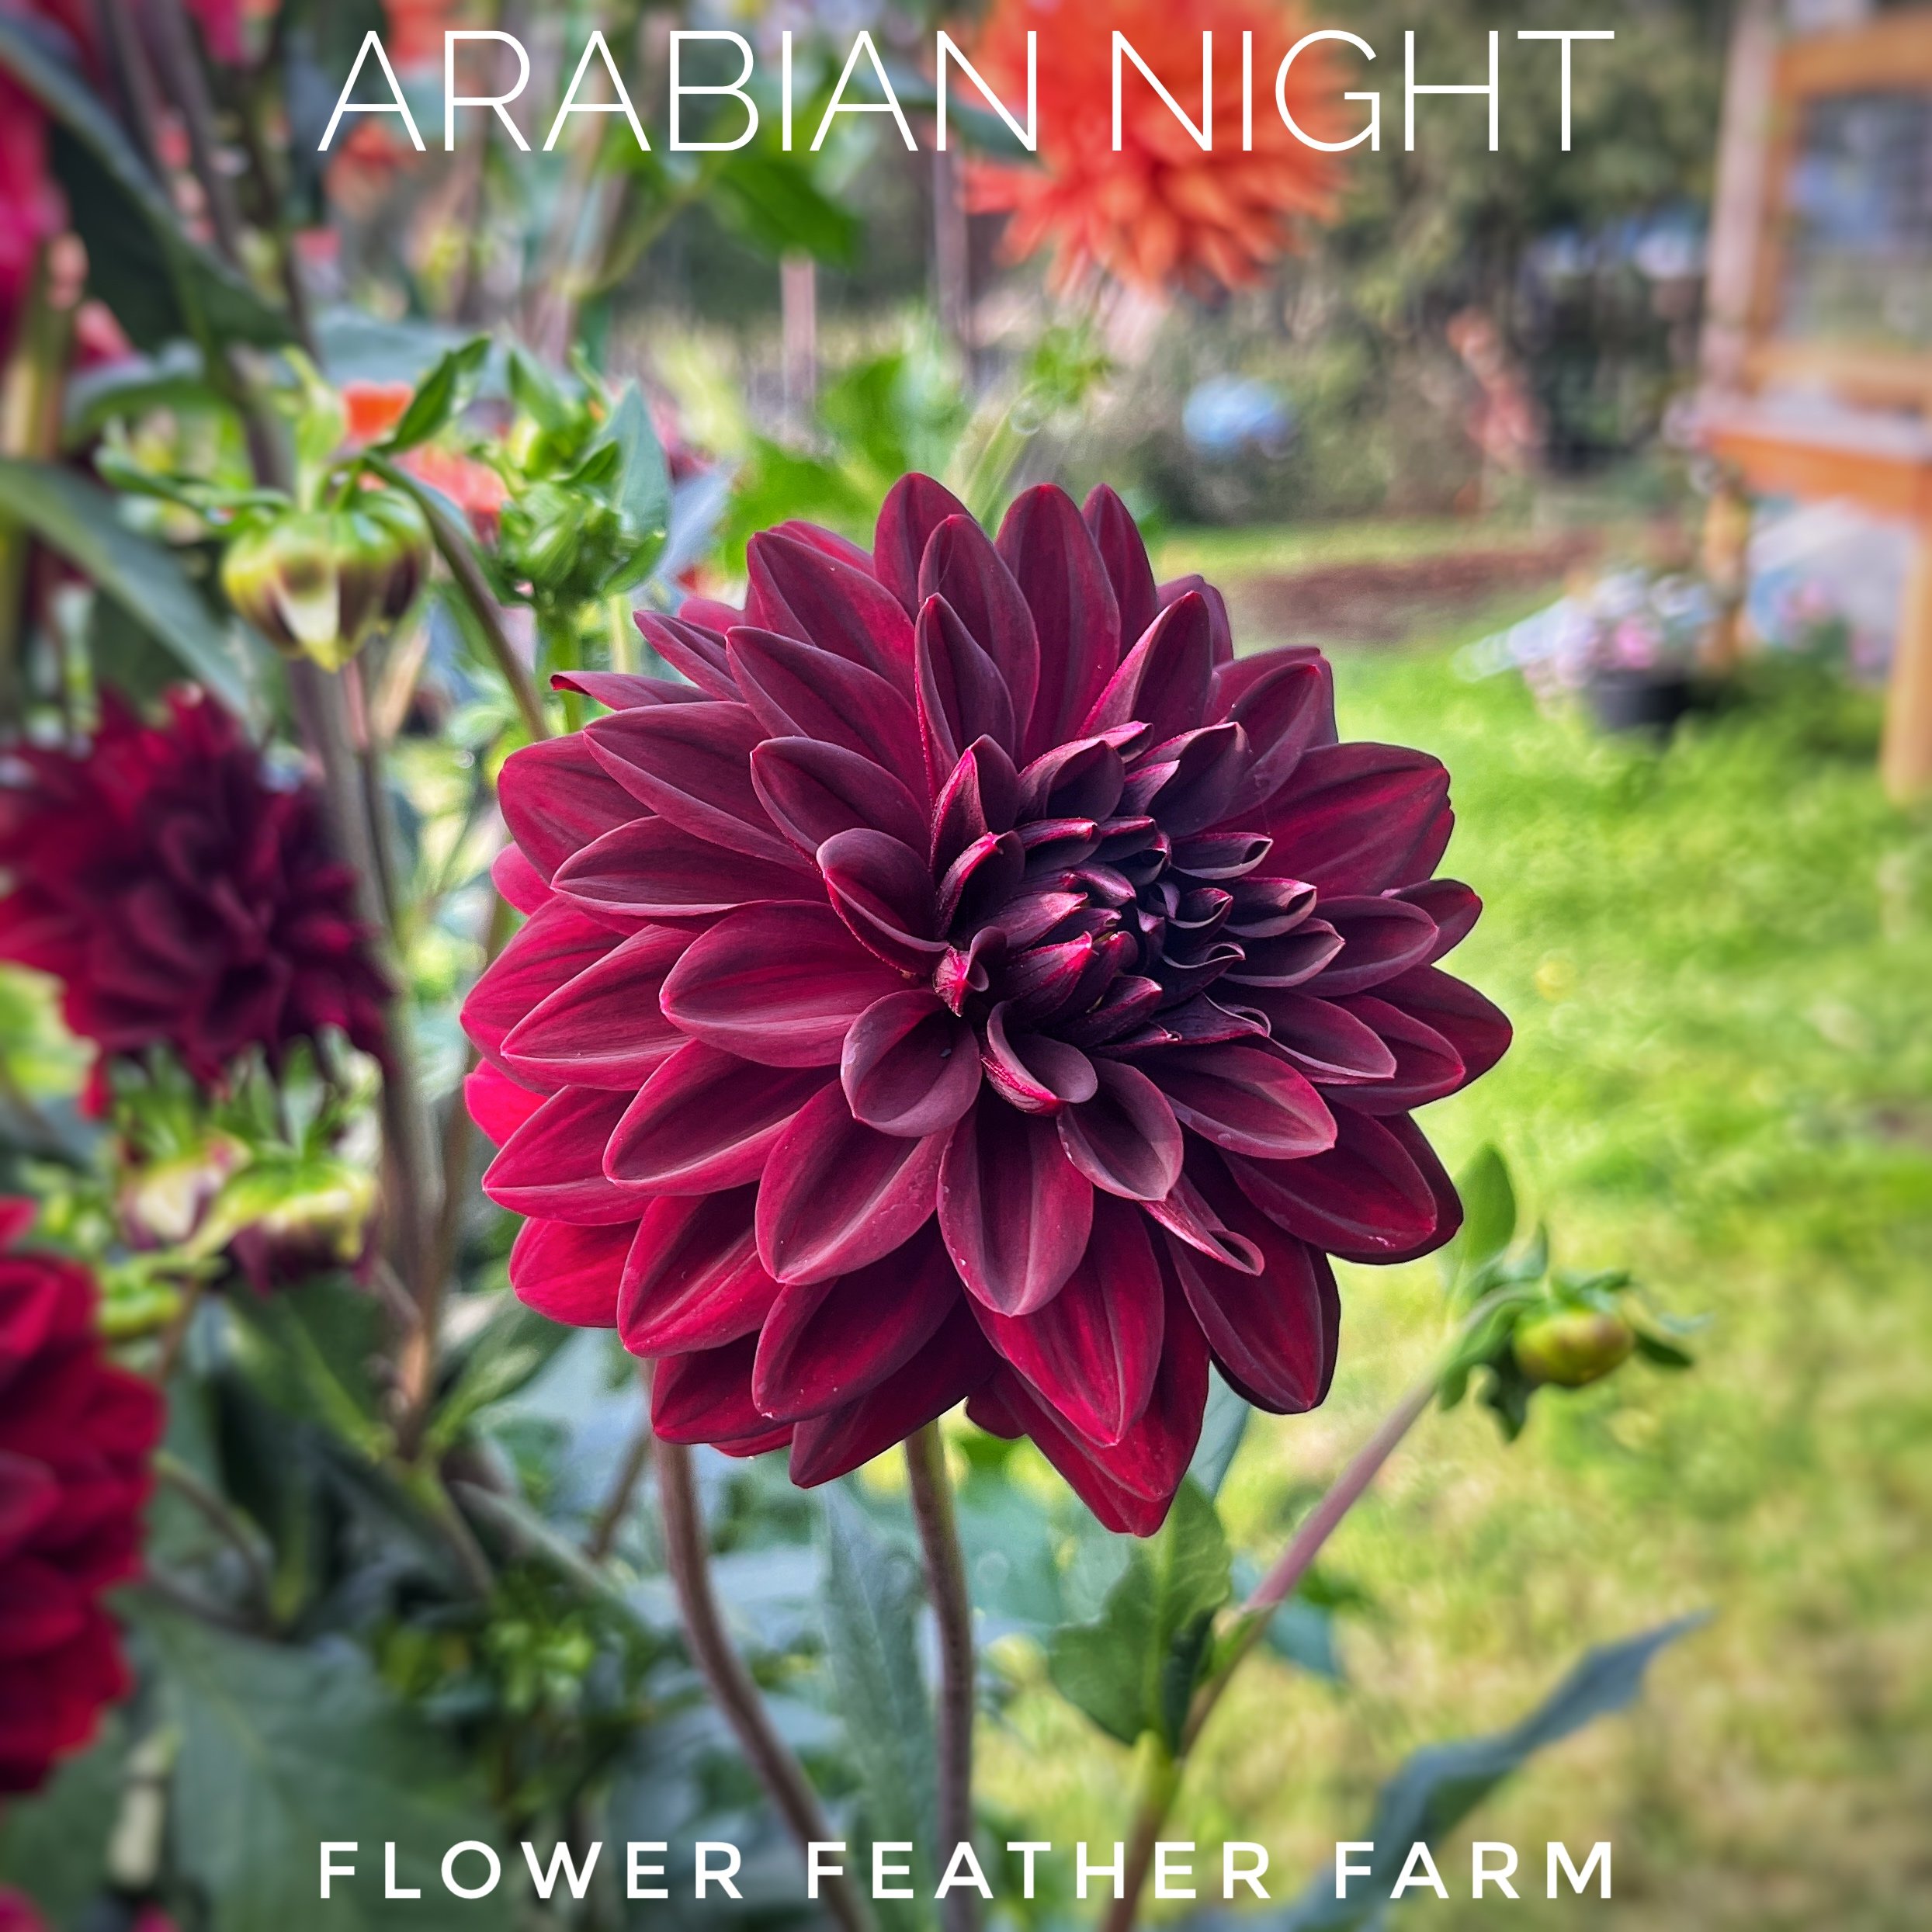 Arabian Night at Flower Feather Farm, chicks &amp; dahlias